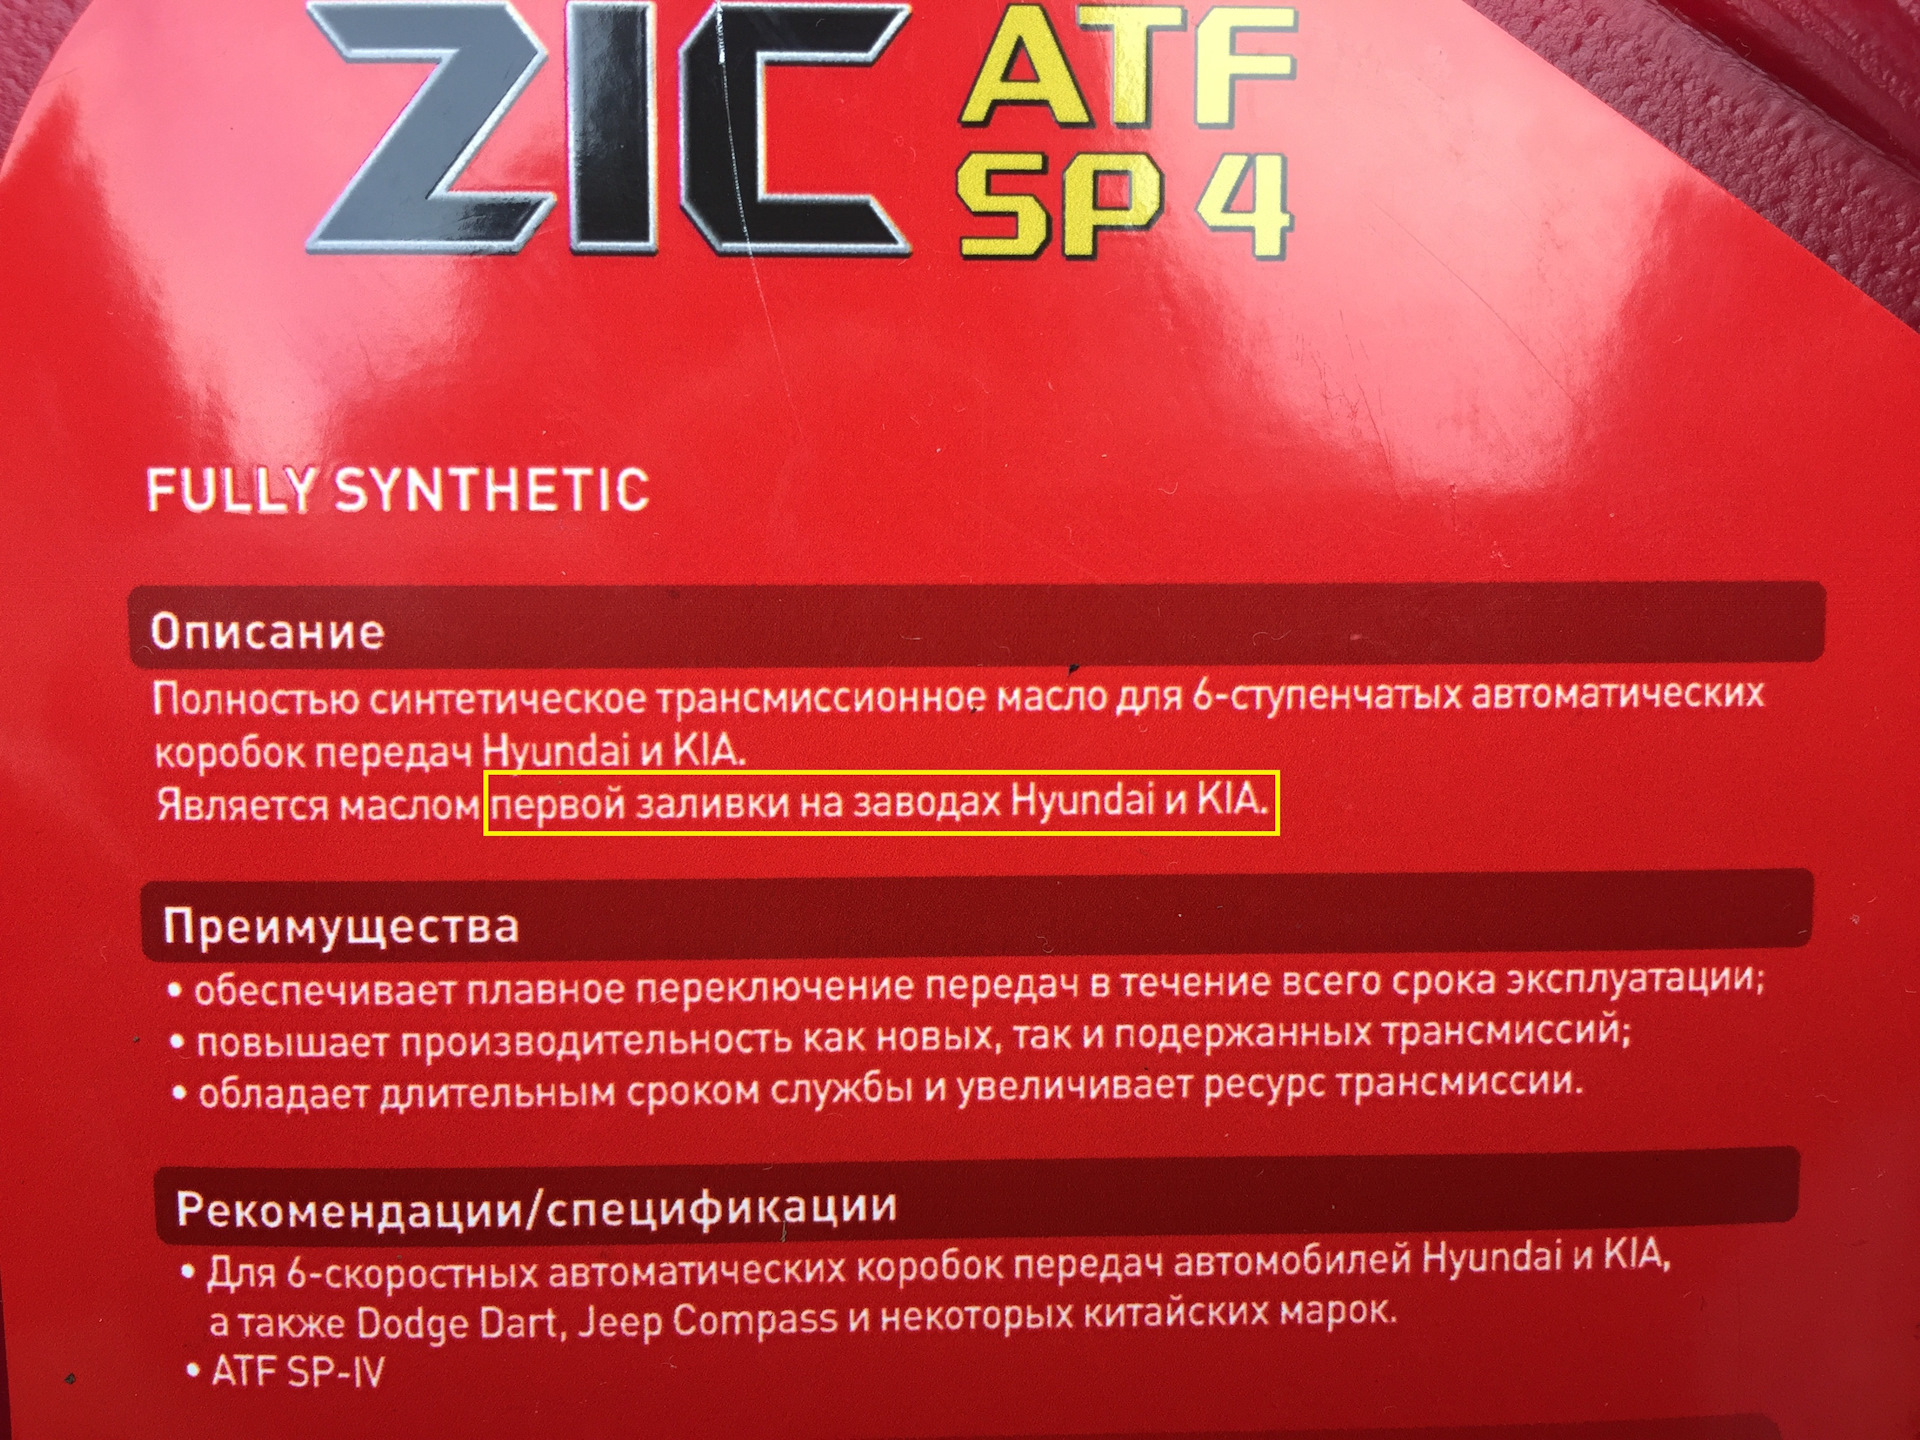 Multi atf допуски. Зик сп3. Масло зик сп3. ATF SP 6 ZIK. ZIC ATF Multi допуски.